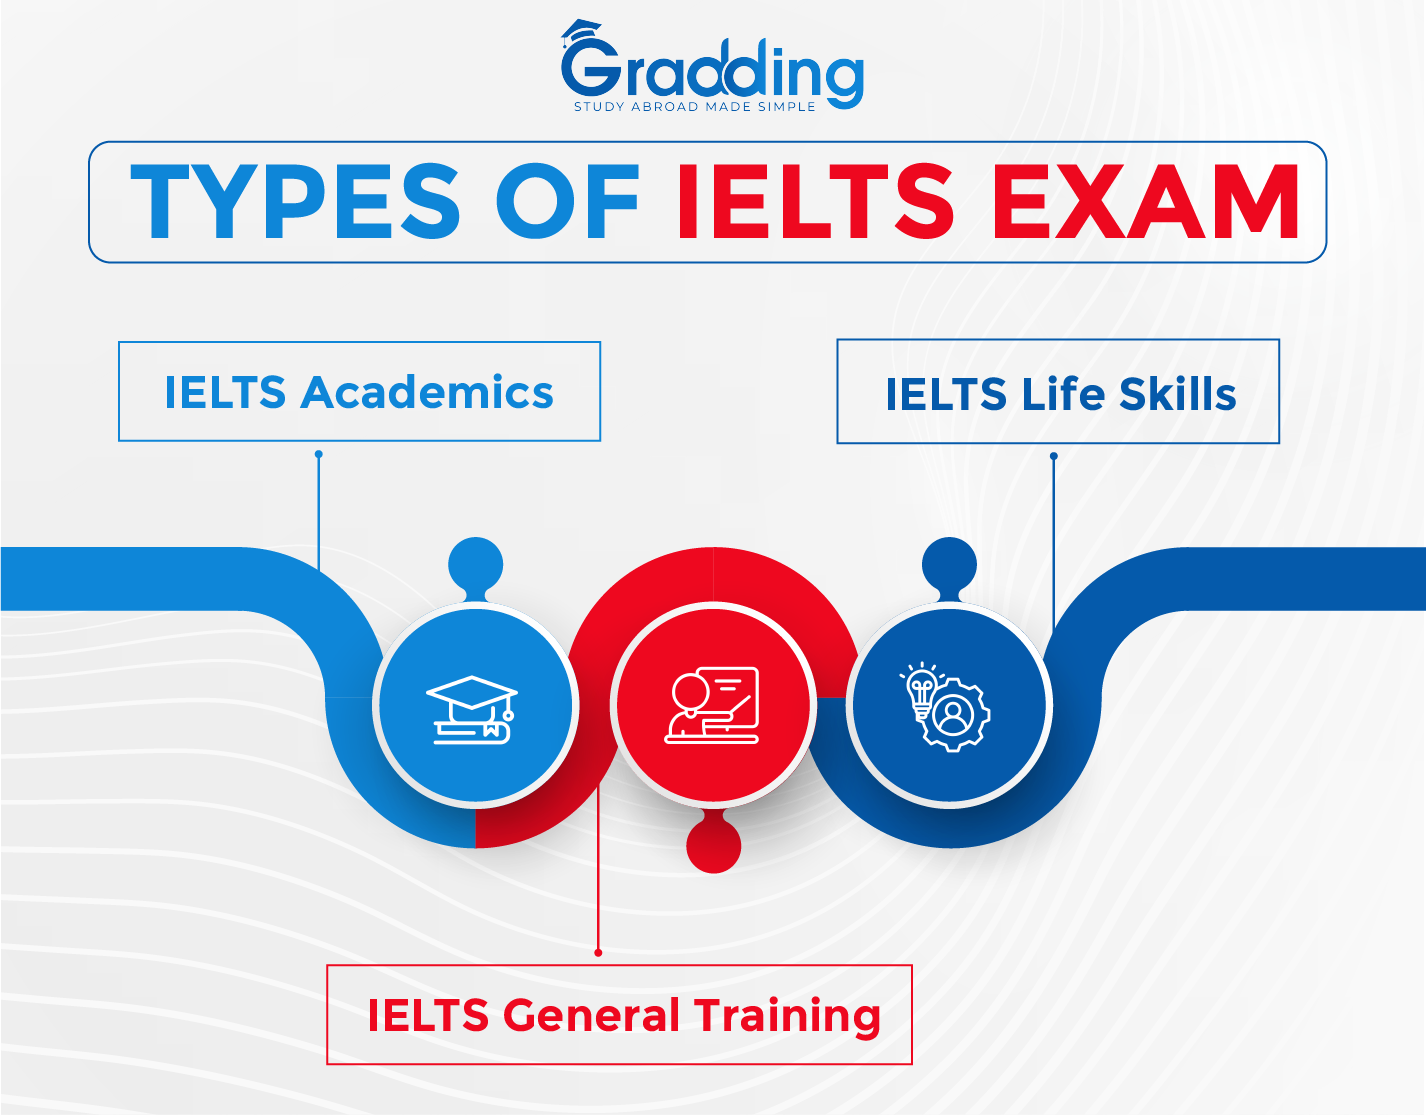 Types of IELTS Exams